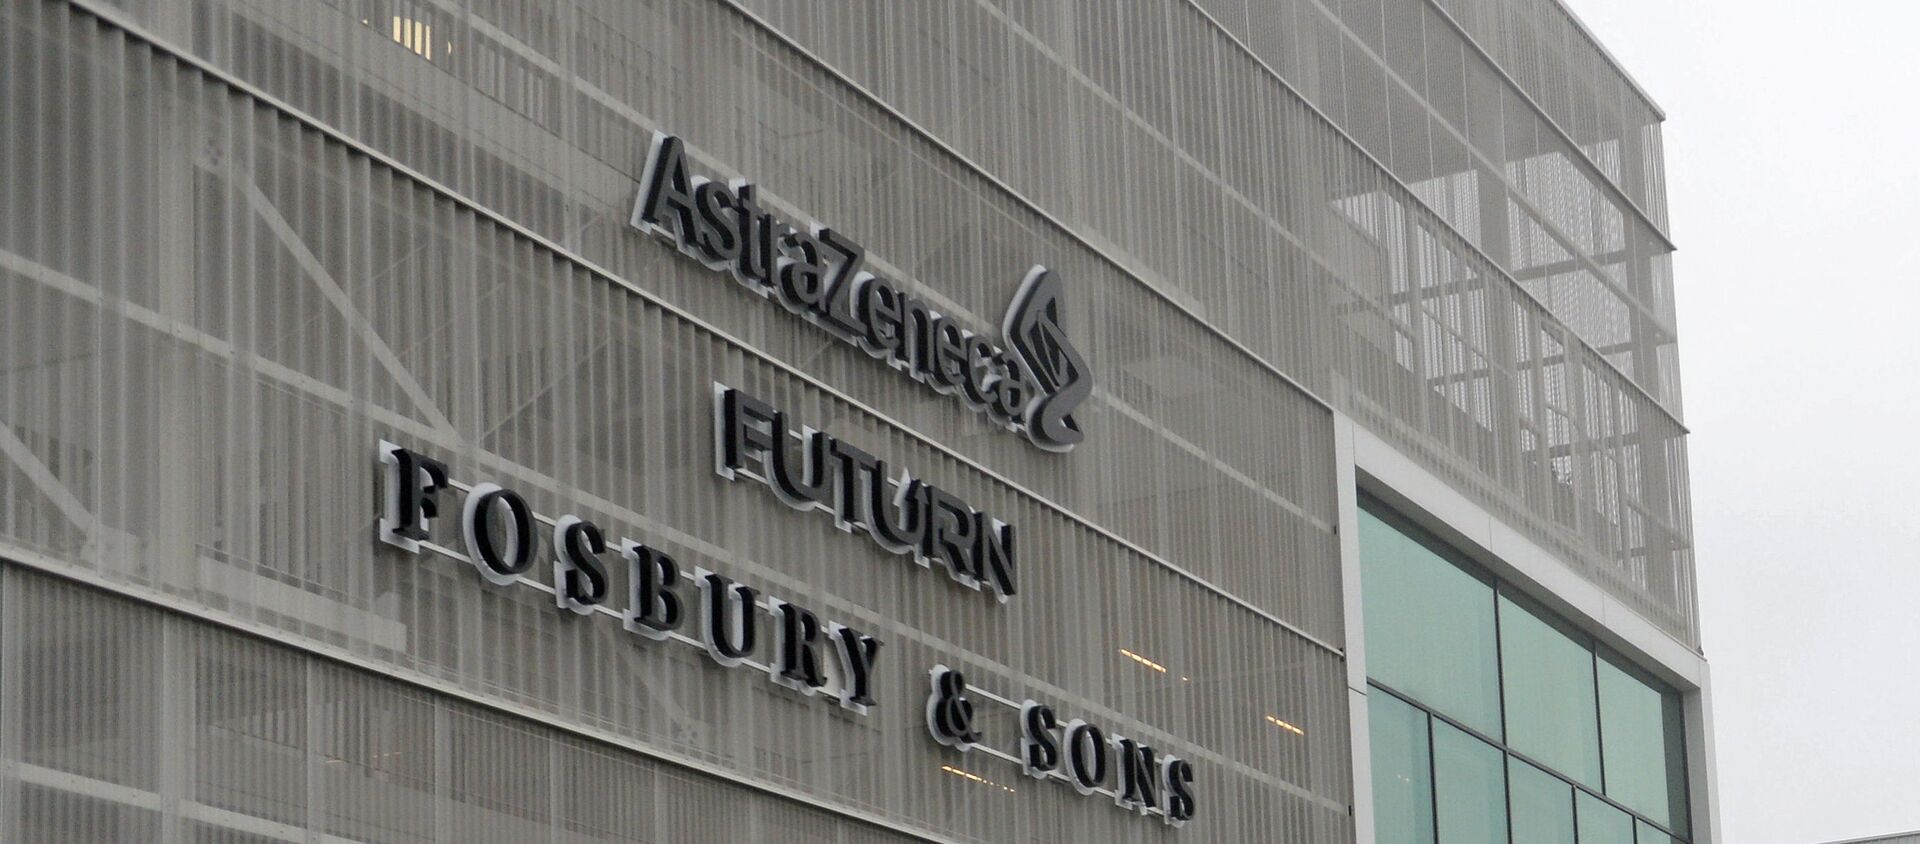 The AstraZeneca office building in Brussels - Sputnik International, 1920, 08.02.2021